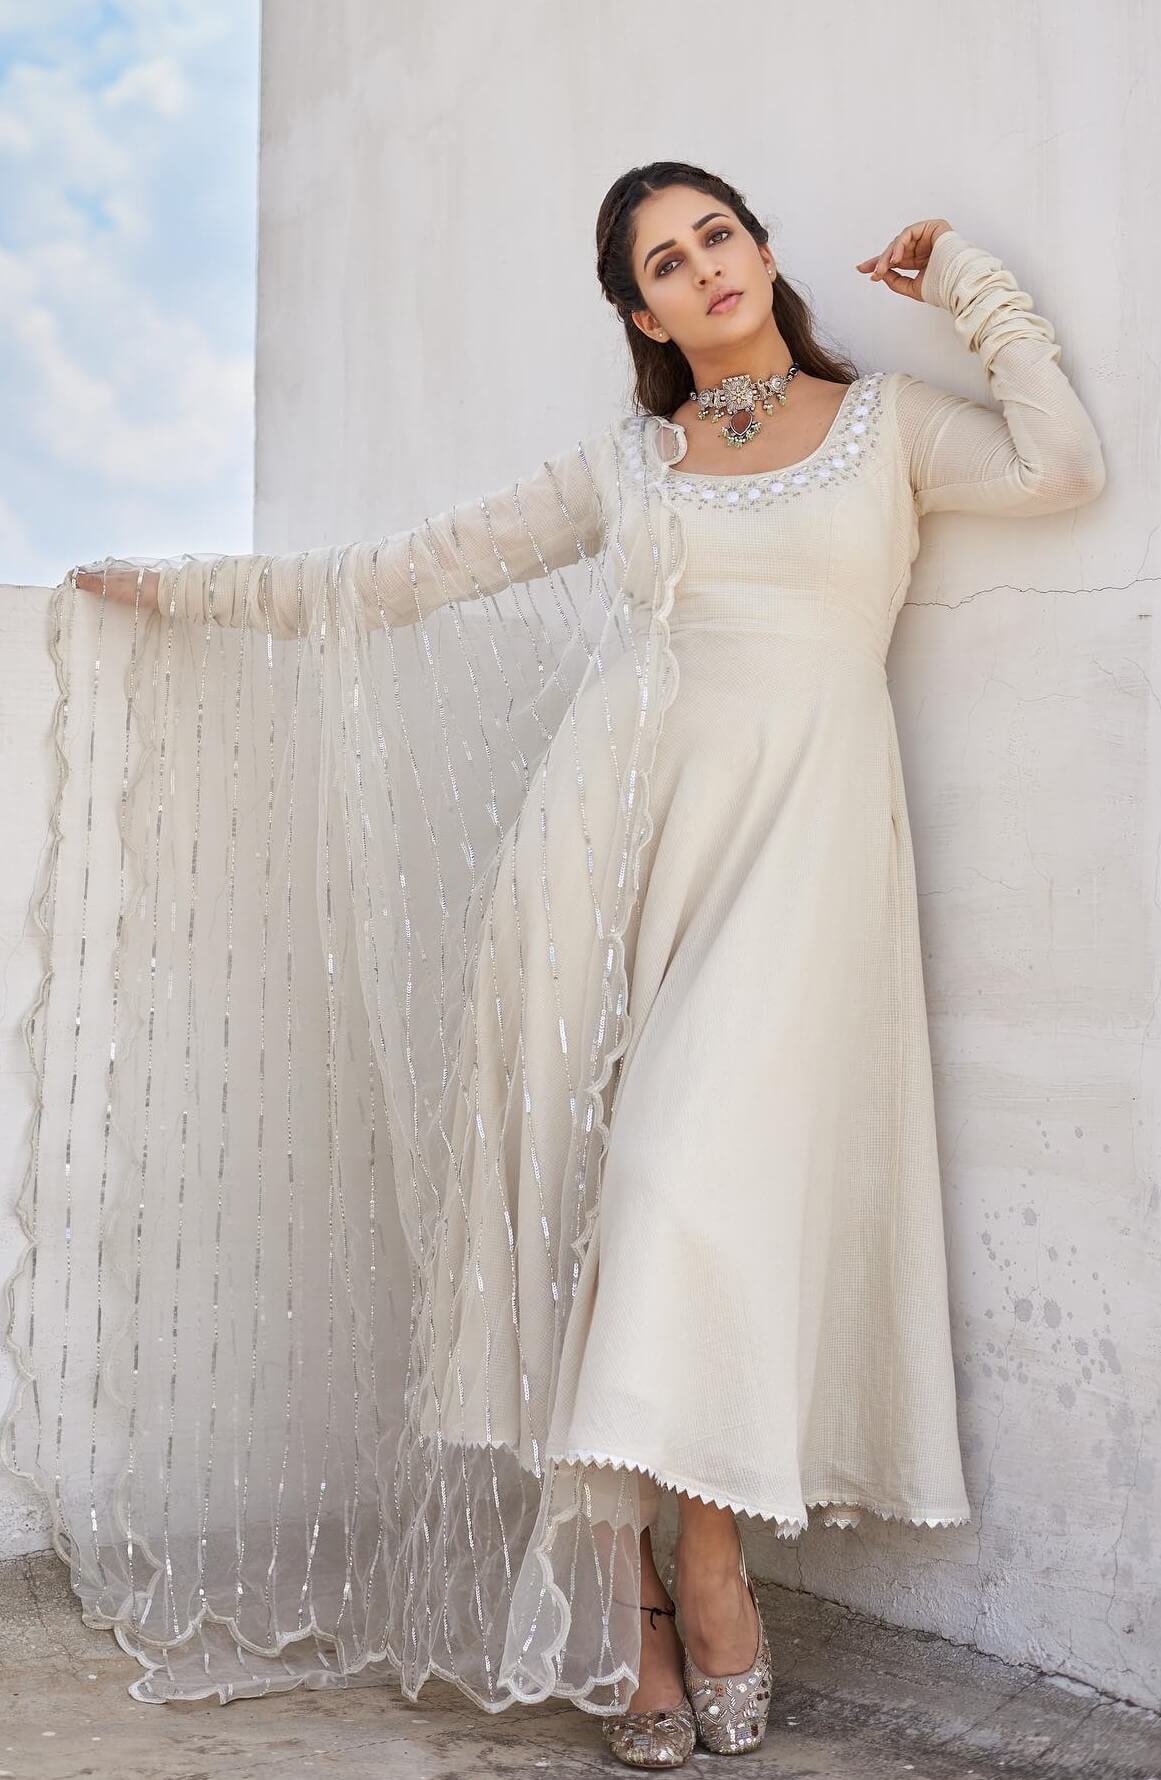 Telgu Actress Lavanya Tripathi Chic Look In White A-Line Kurta Set With Full Sleeves